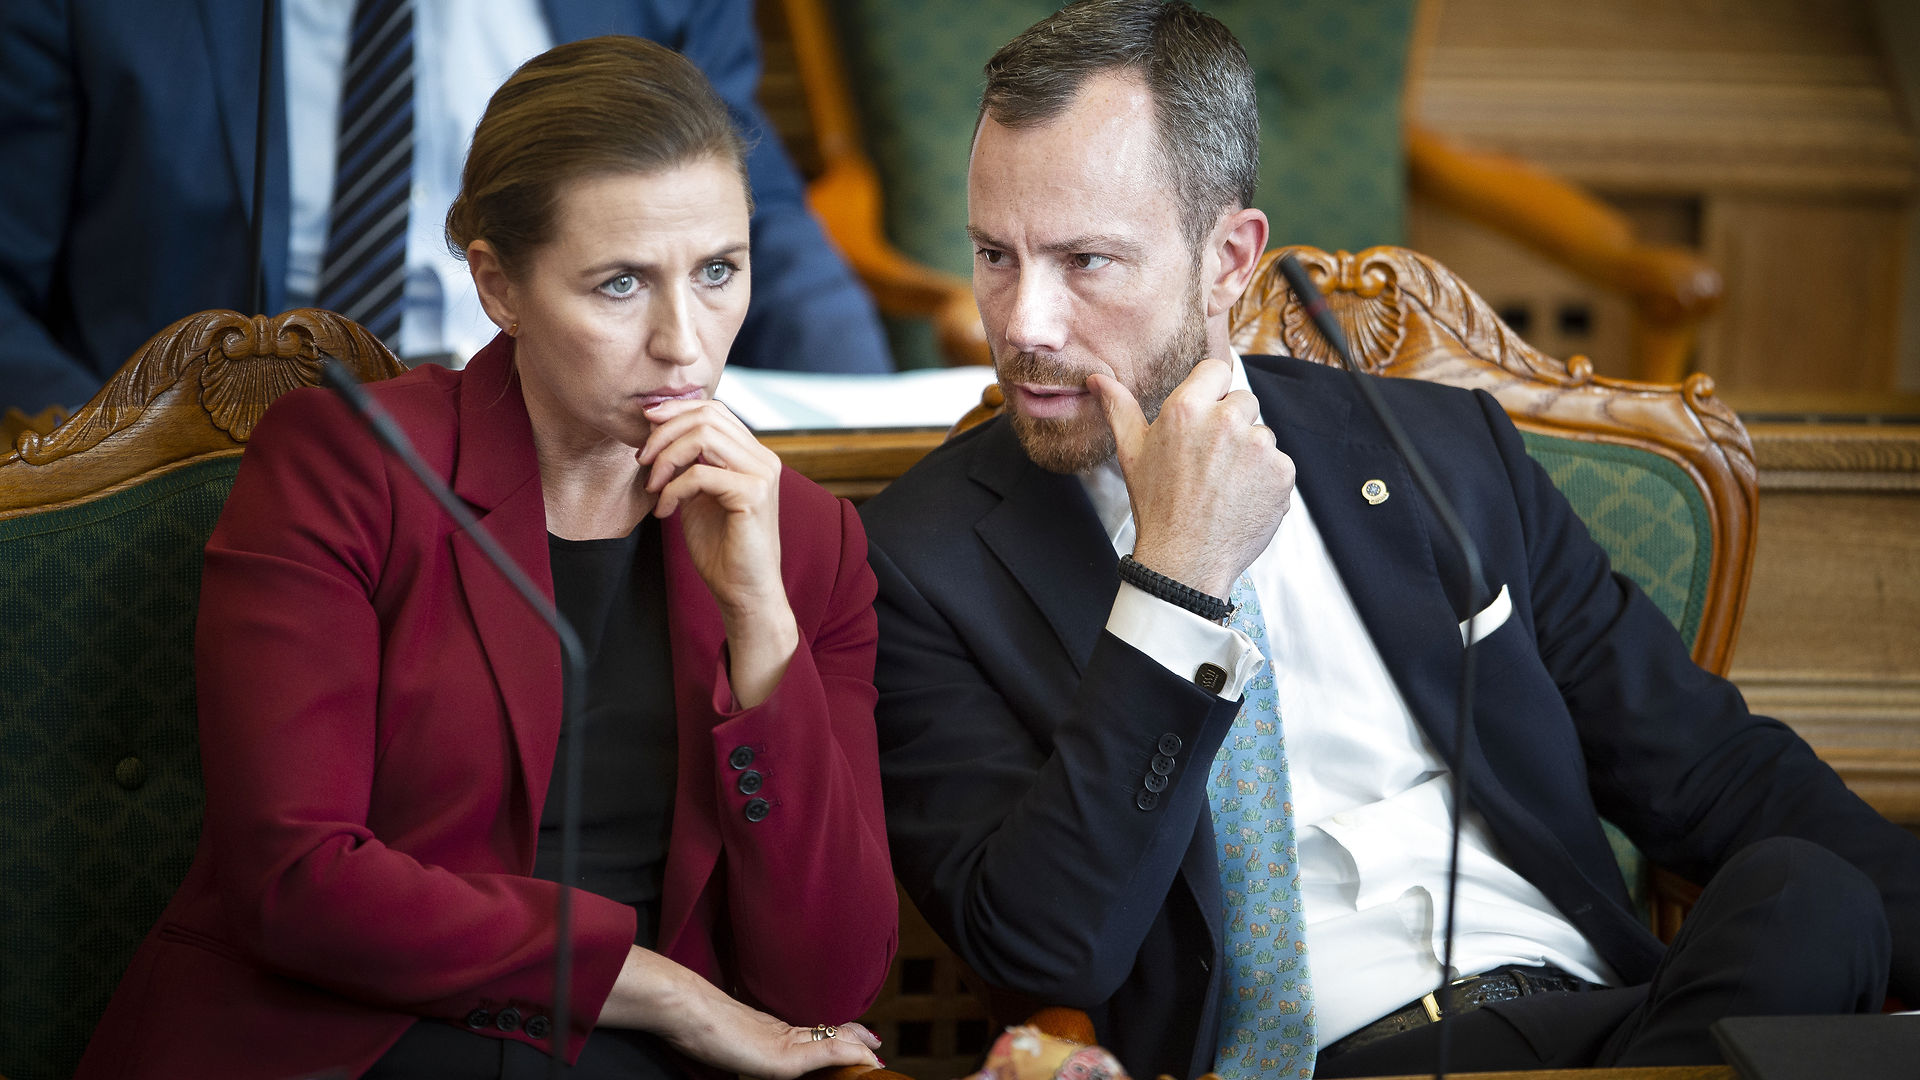 Christiern S. Rasmussen: Folketingsvalget undgik udenlandsk påvirkning. Men hvordan beskytter vi fortsat vores demokrati?